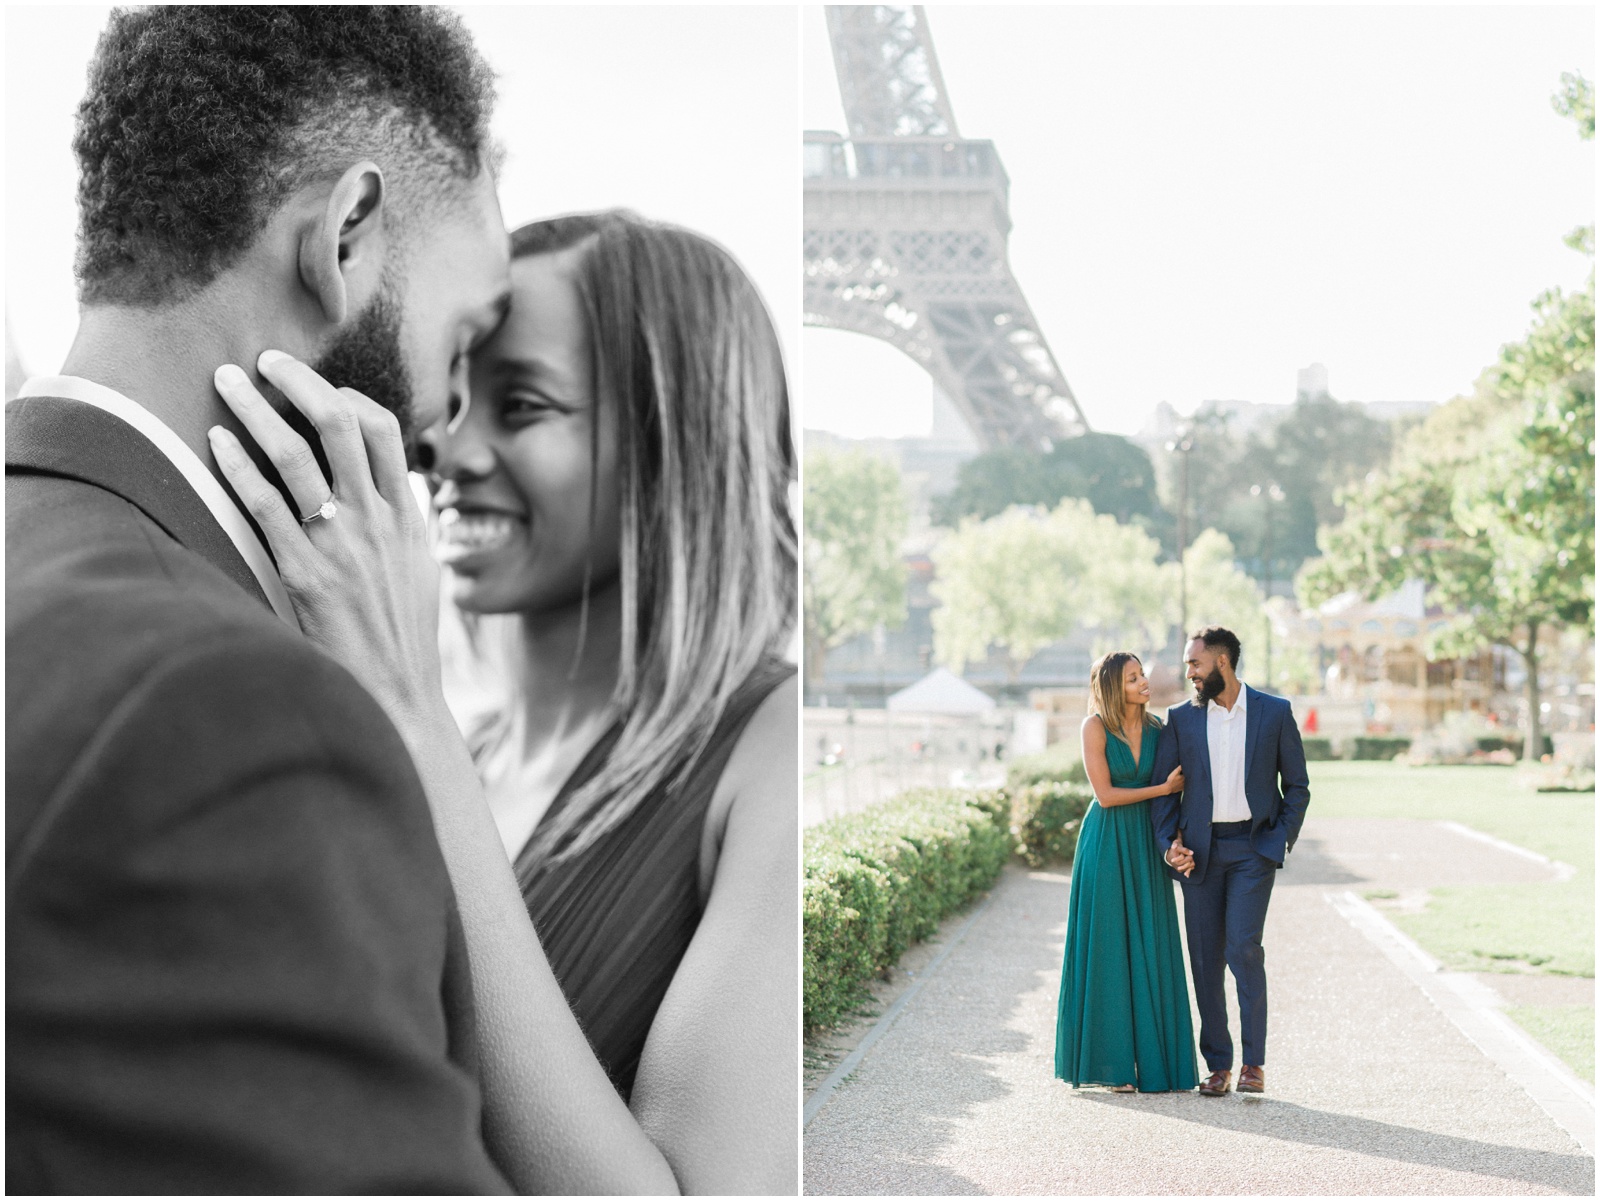 Engagement session in Paris at Trocadero